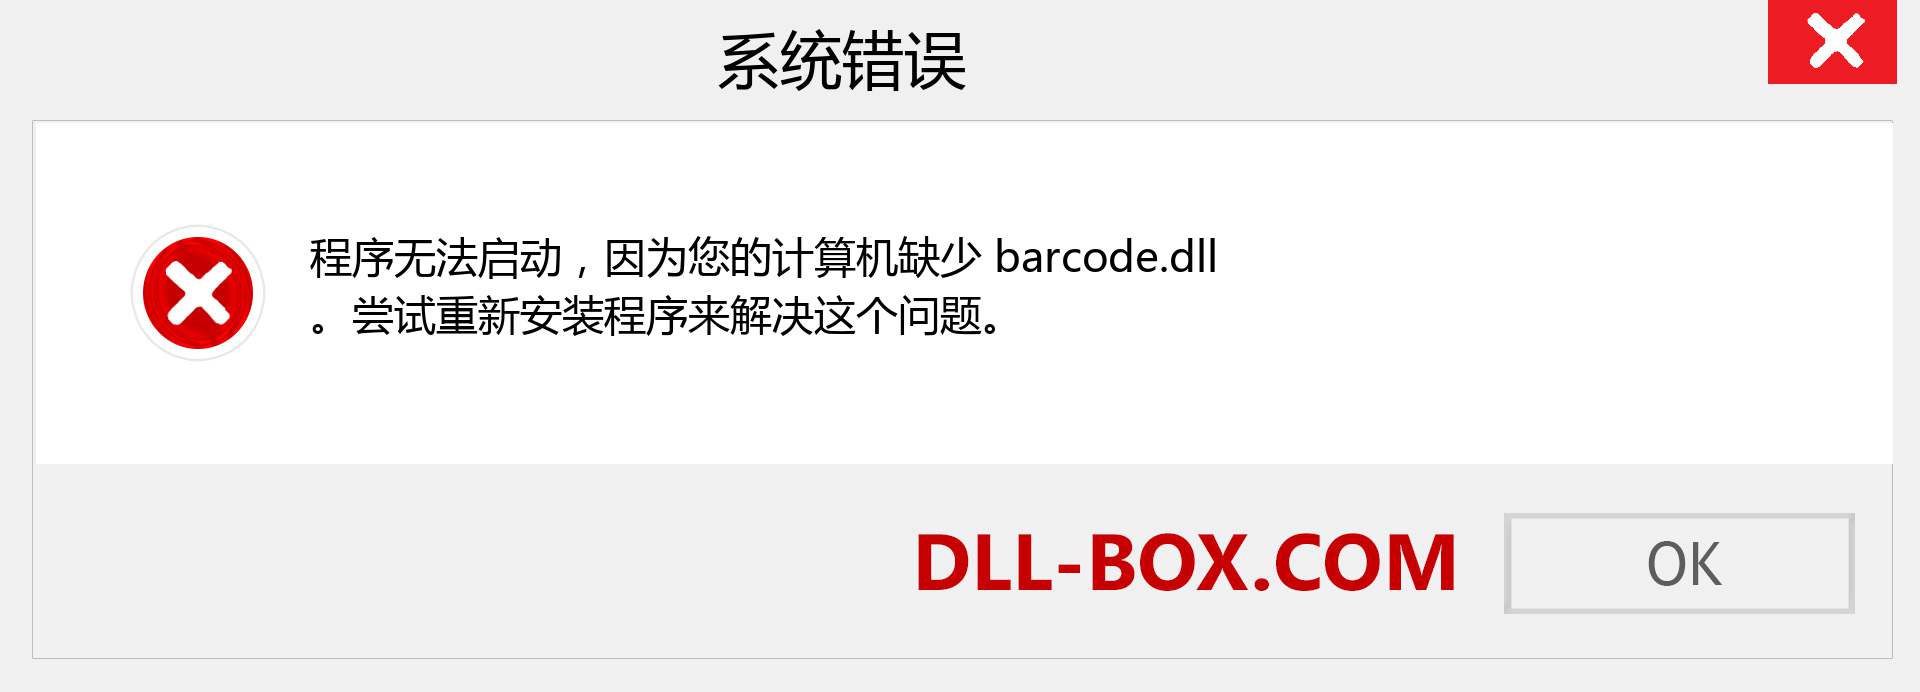 barcode.dll 文件丢失？。 适用于 Windows 7、8、10 的下载 - 修复 Windows、照片、图像上的 barcode dll 丢失错误